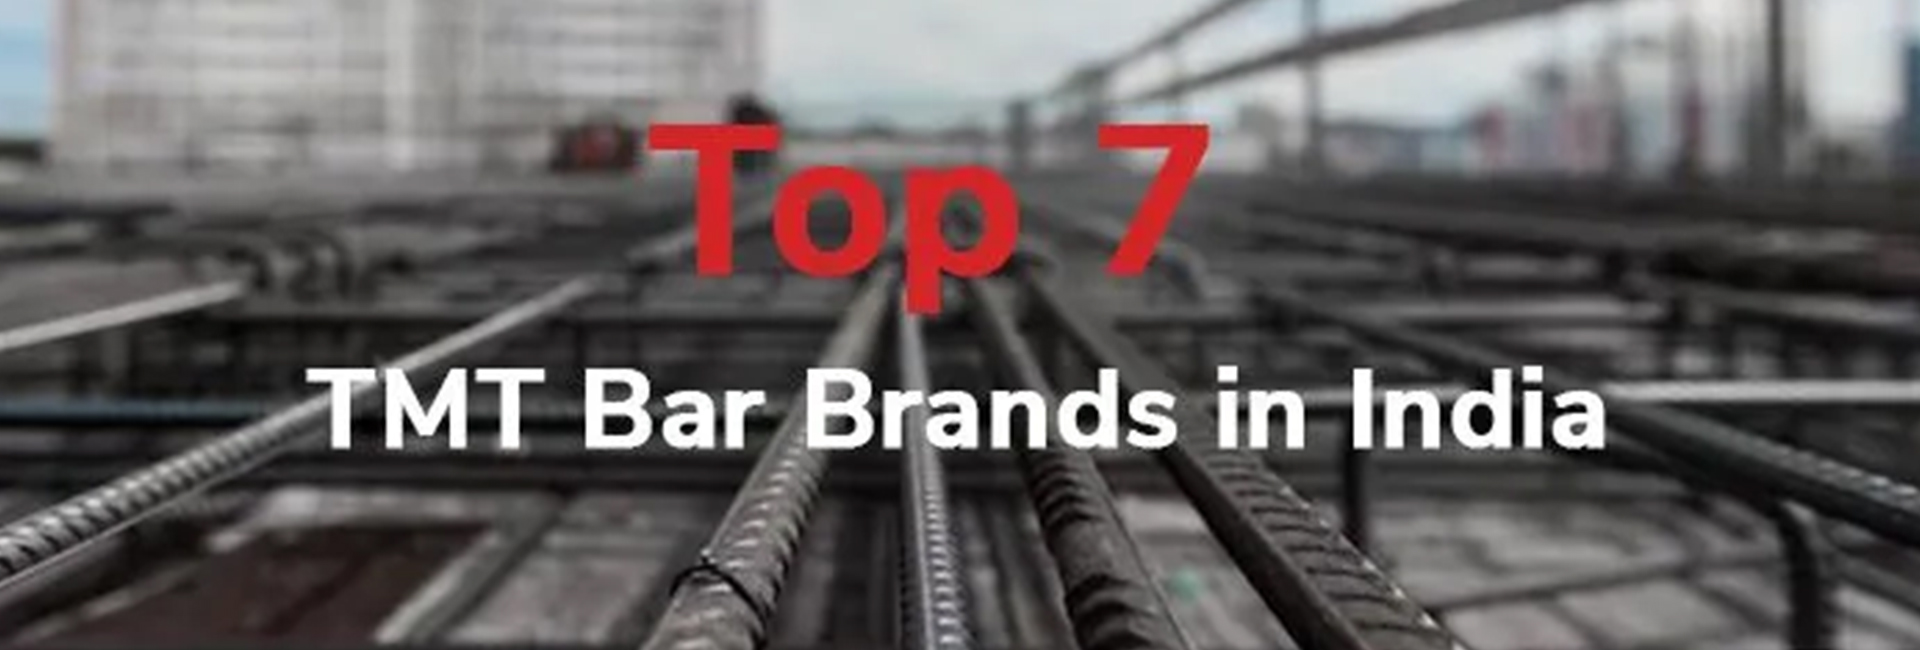 Top 7 TMT Bar Brands in India